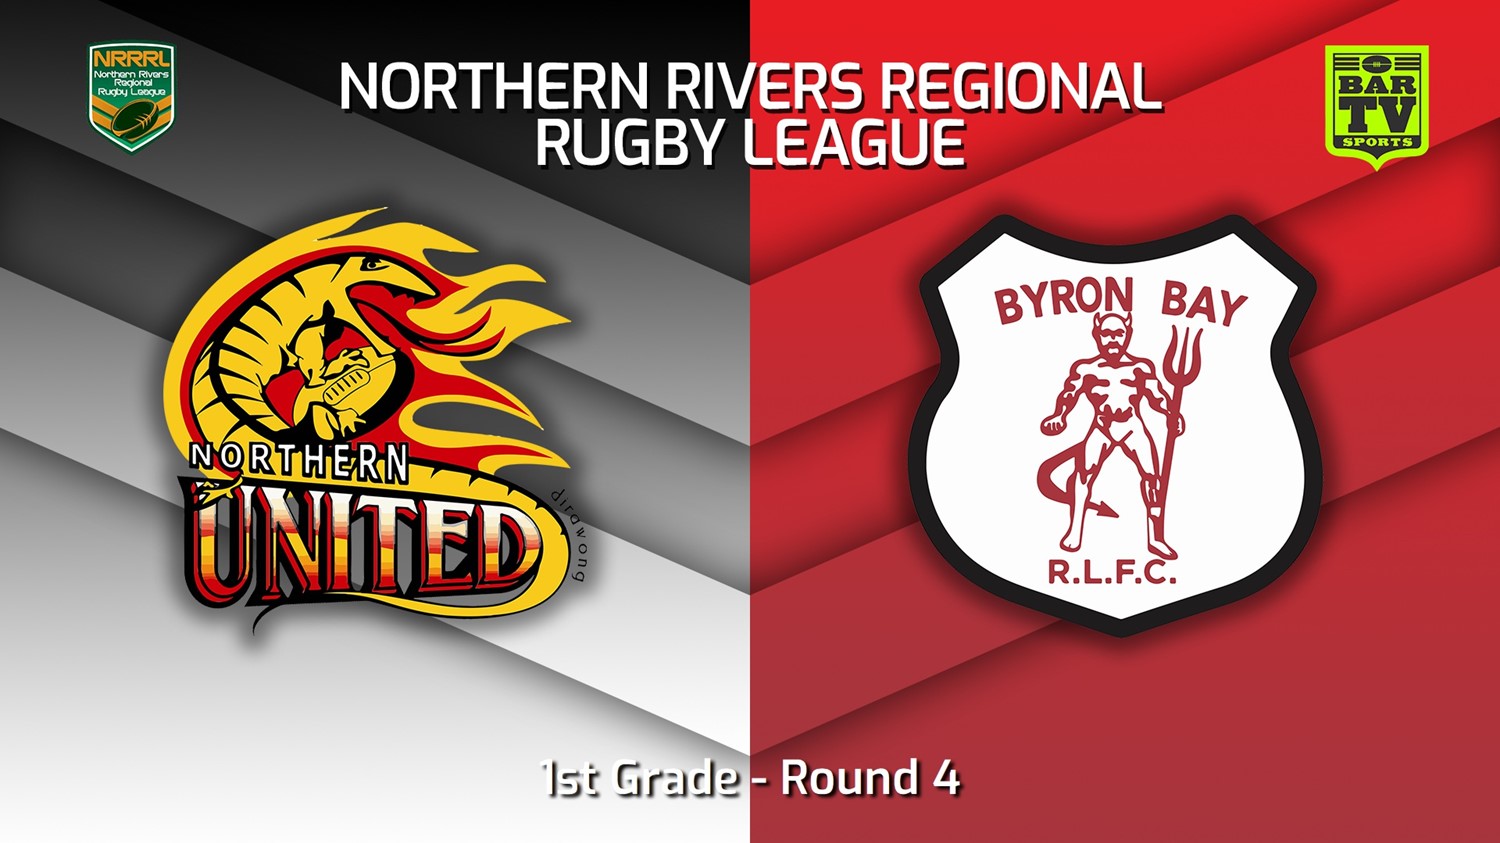 220731-Northern Rivers Round 4 - 1st Grade - Northern United v Byron Bay Red Devils Slate Image